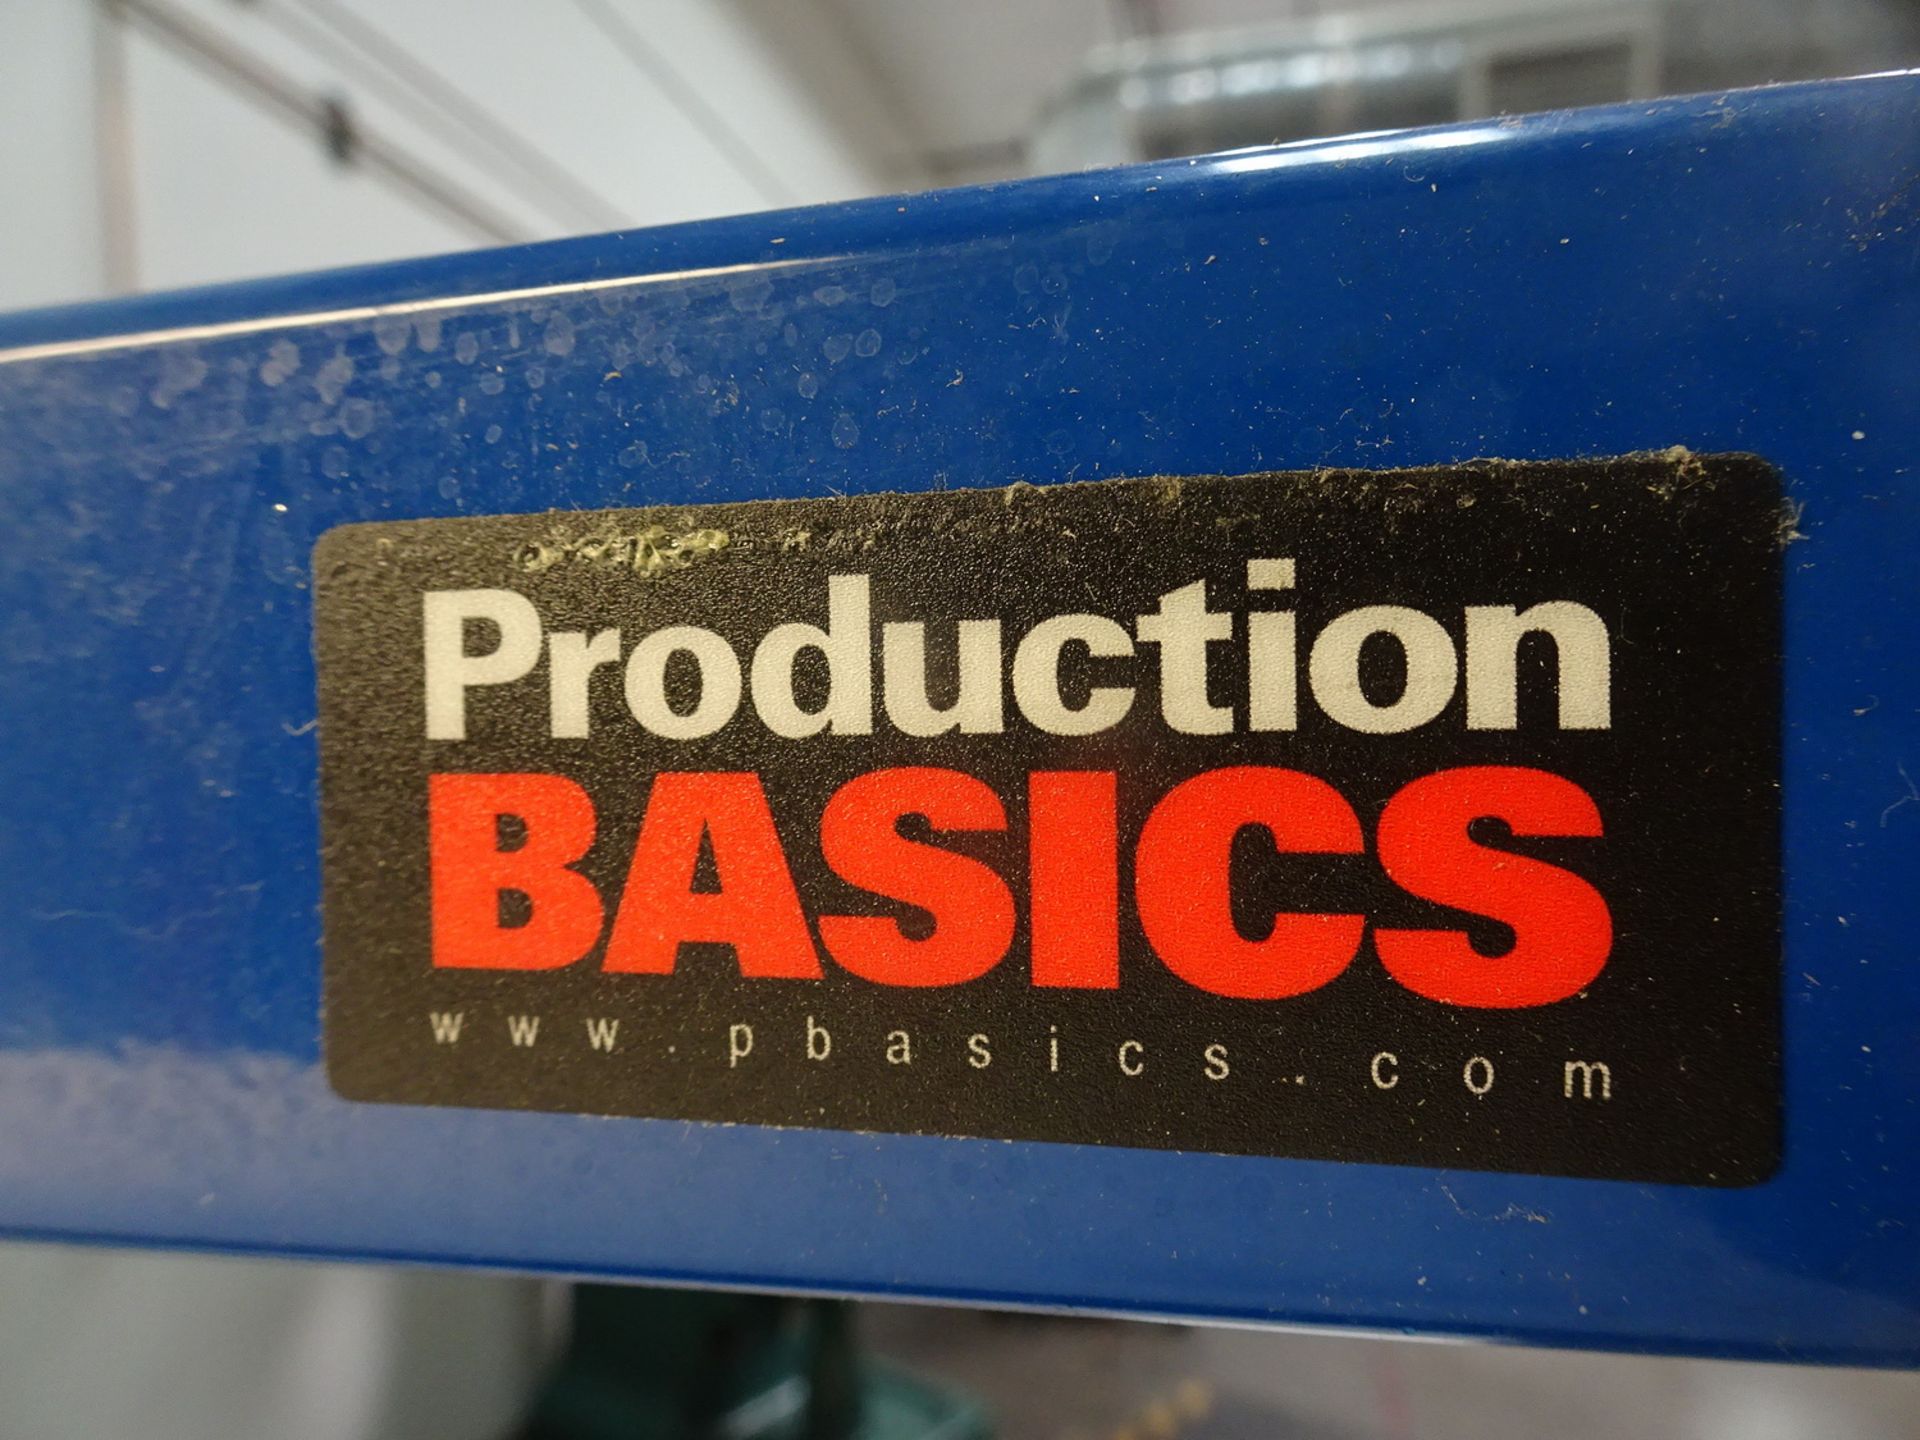 Production Basics Lab Bench w/ Upper Lighting & Shelf, 72"x30" (No Contents) - Image 3 of 4